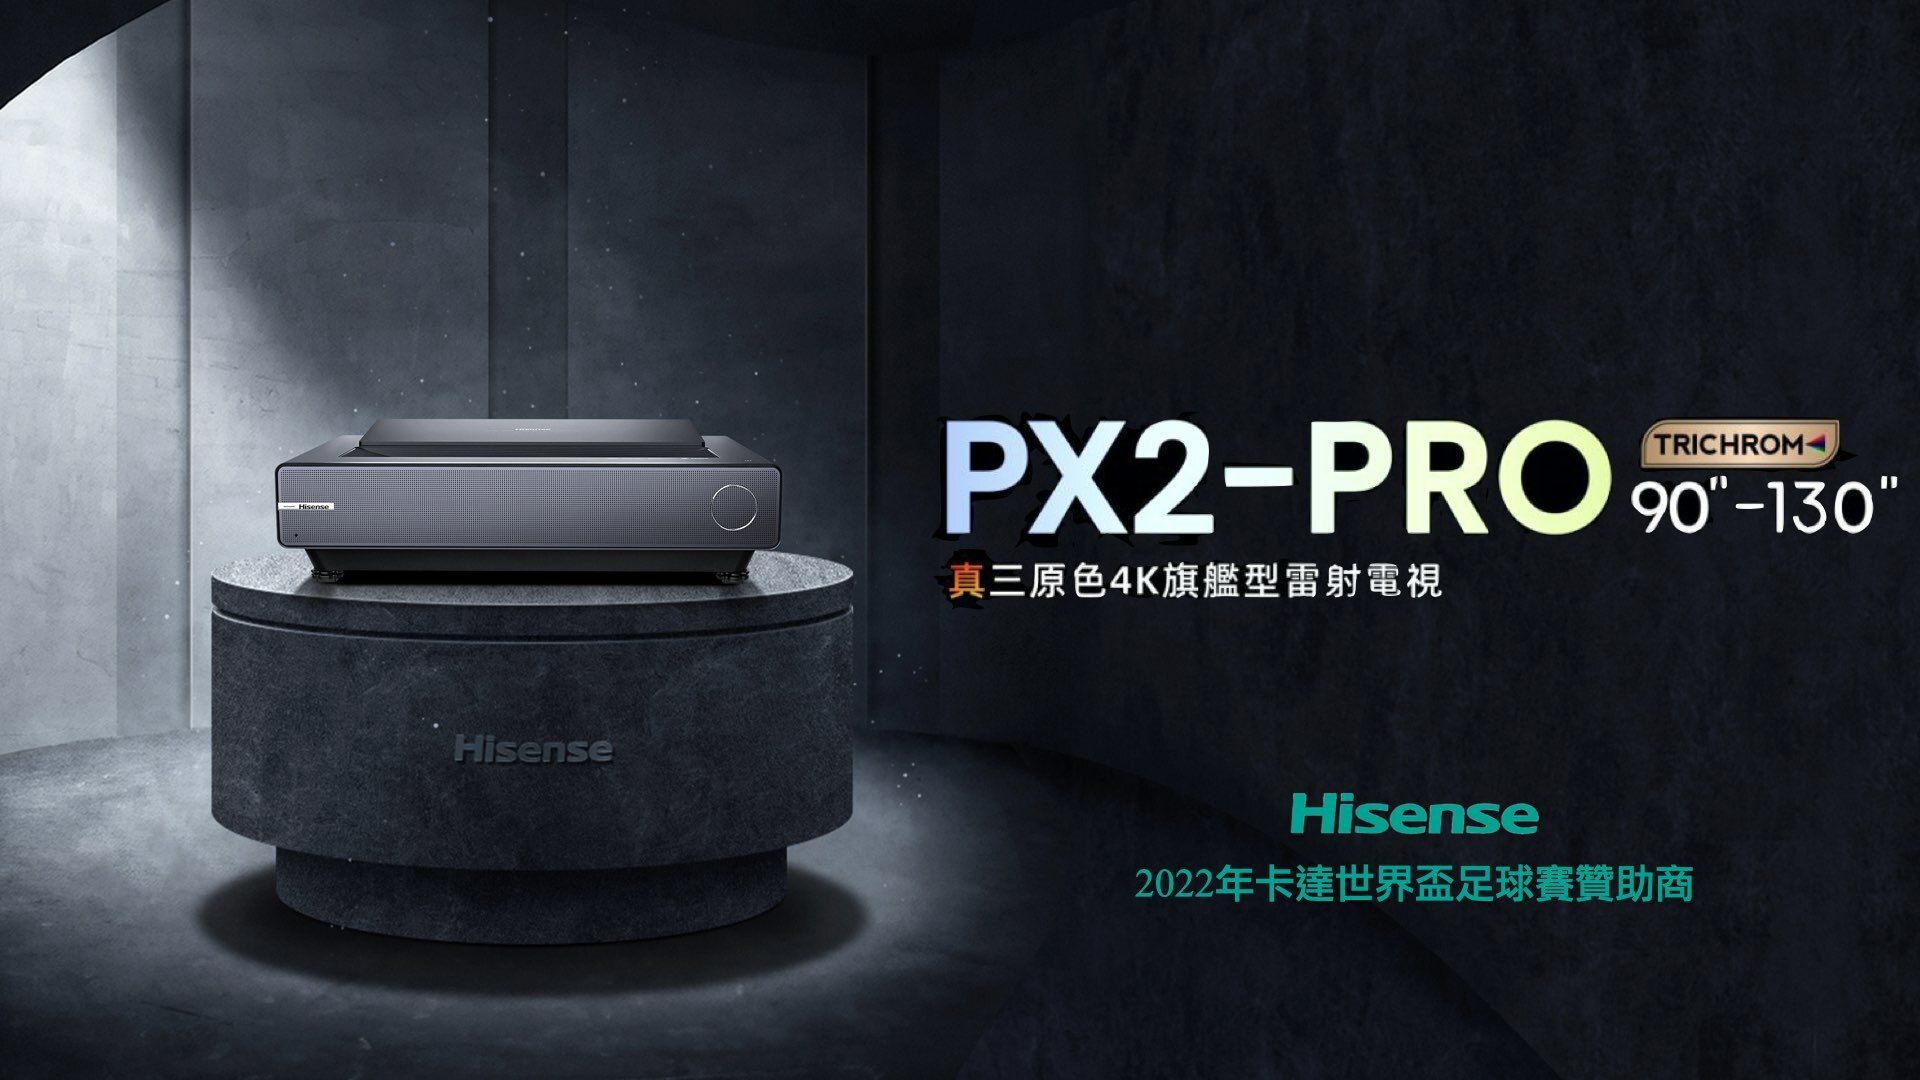 HisenseTRICHROMPX2-PRO 真三原色4K旗艦型雷射電視Hisense2022年卡達世界盃足球賽贊助商